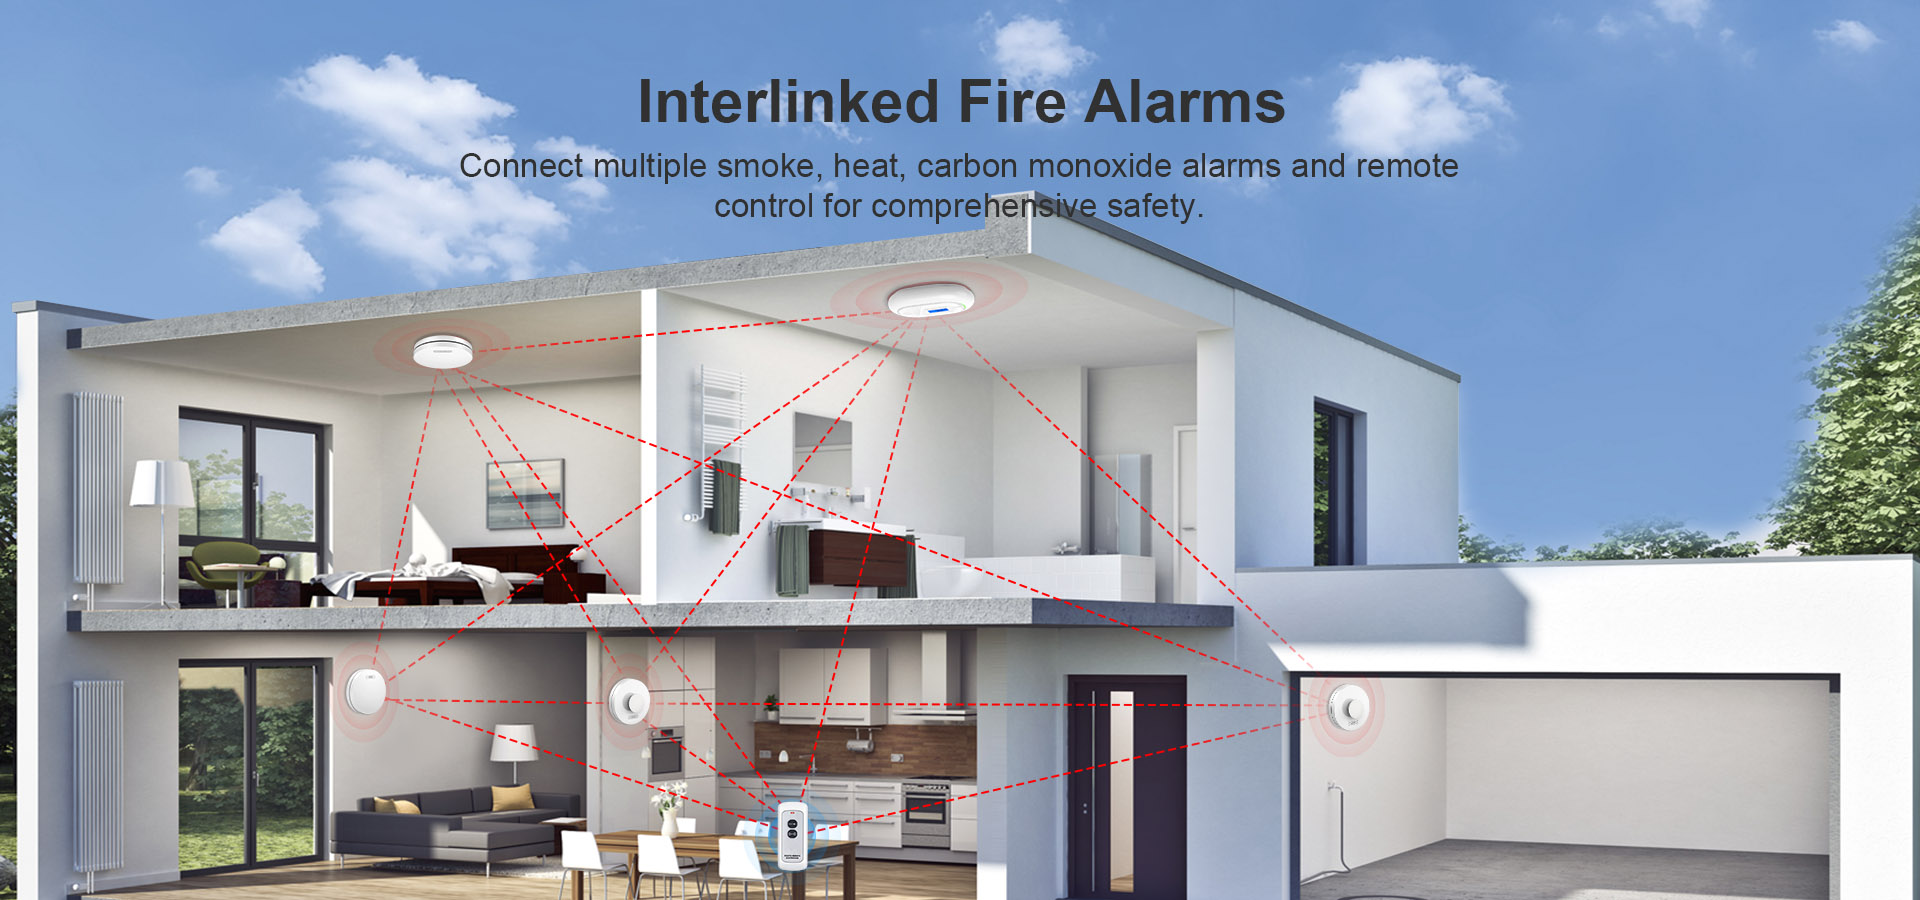 Interlinked Alarm System